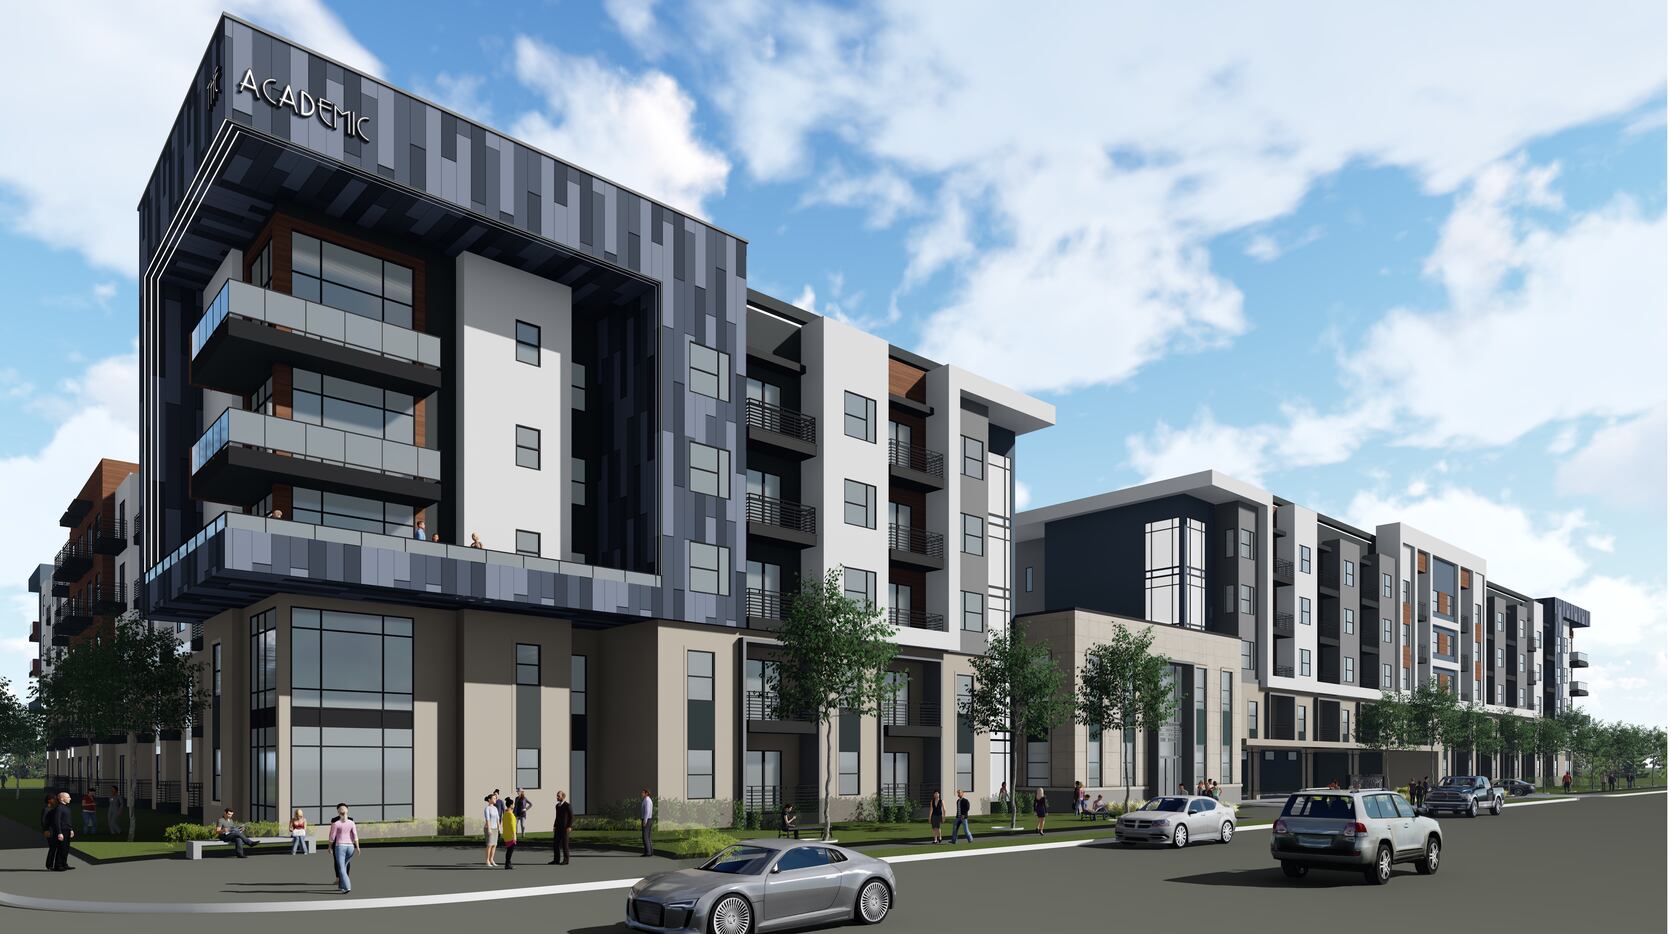 Leon Capital Group's Ross Avenue apartment development includes the 2-story centerpiece...